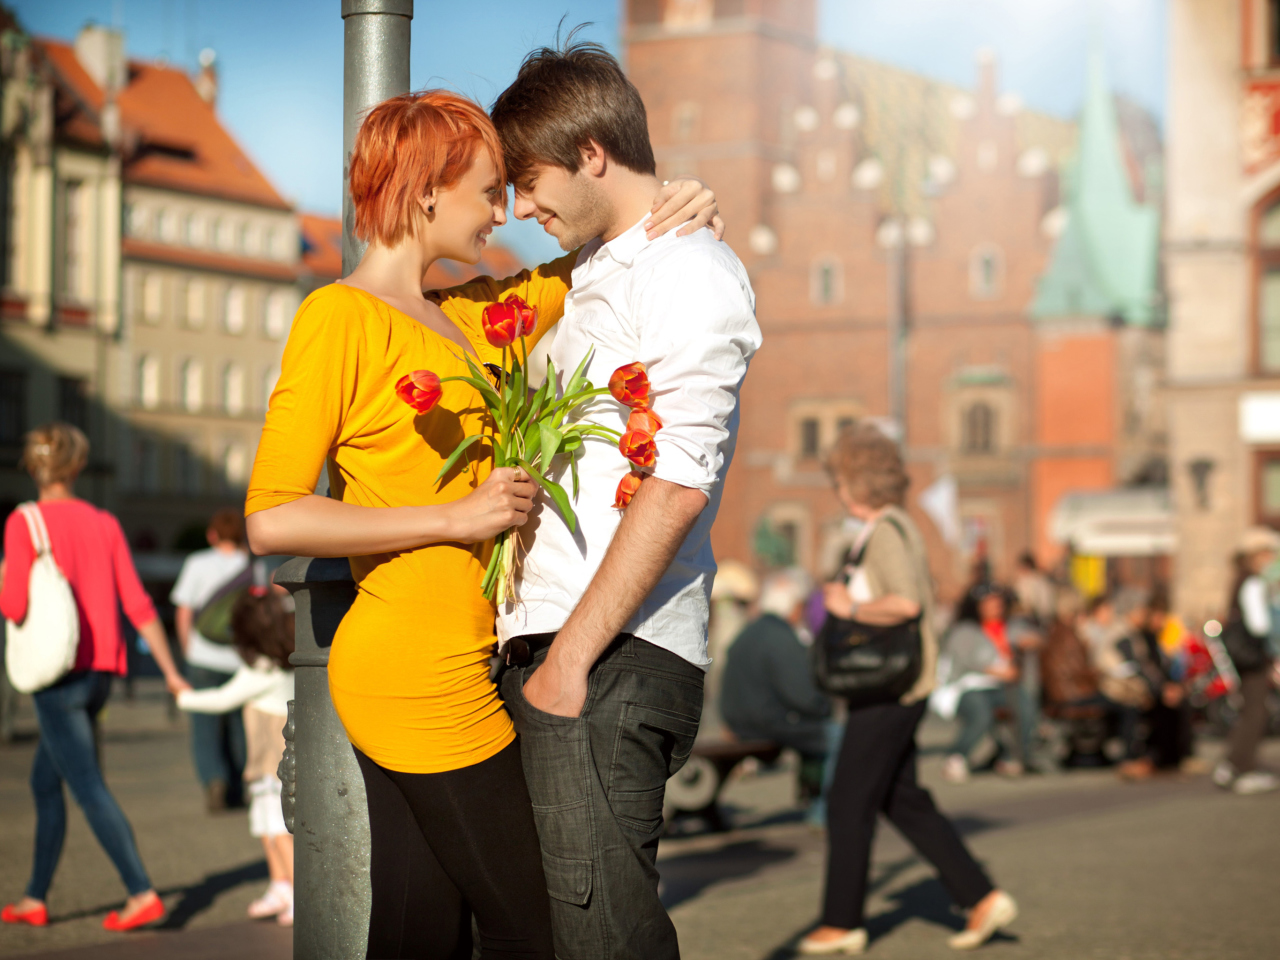 Romantic Date In The City wallpaper 1280x960